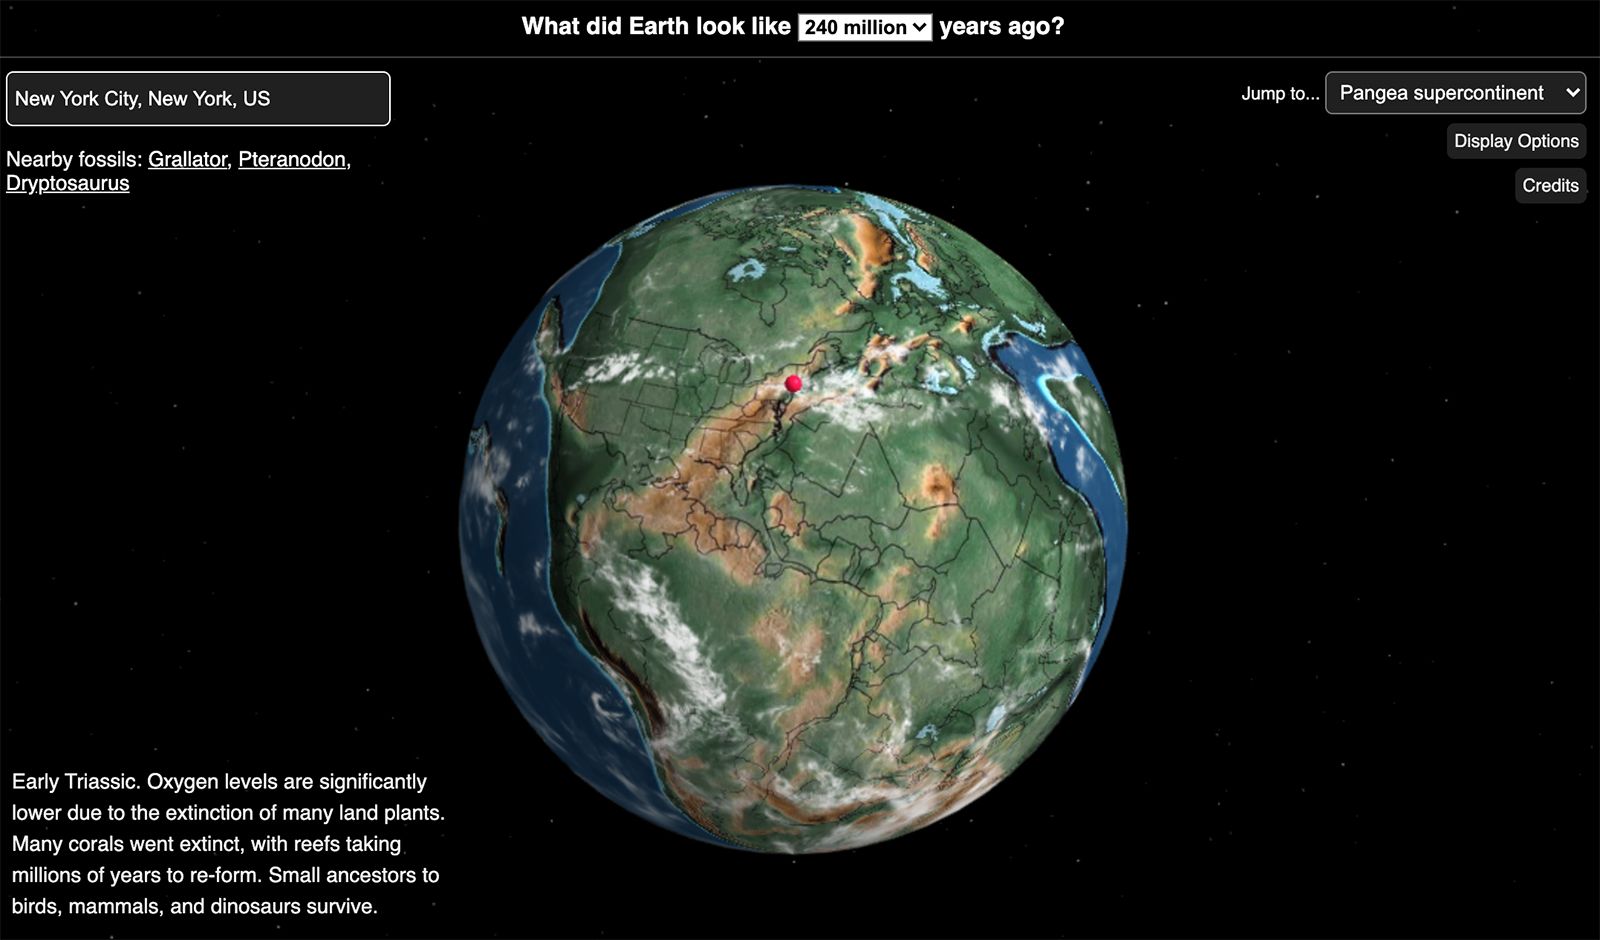 planet earth map school project